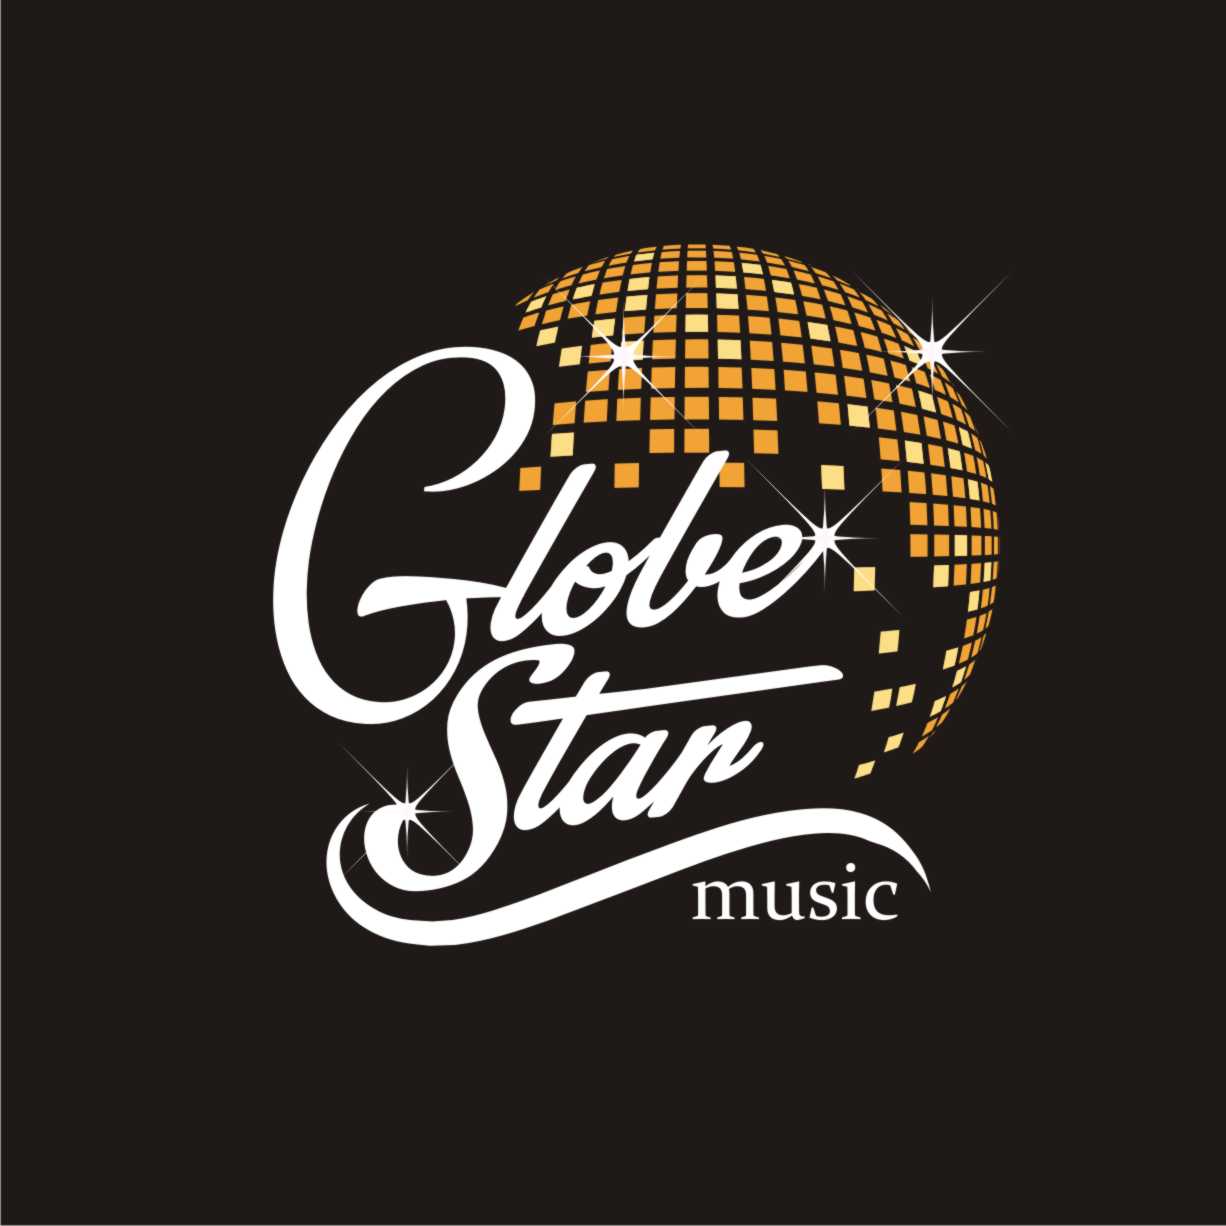 Star Globe Logo - Club Logo Design for Globe Star Music by joshgraph | Design #5188134